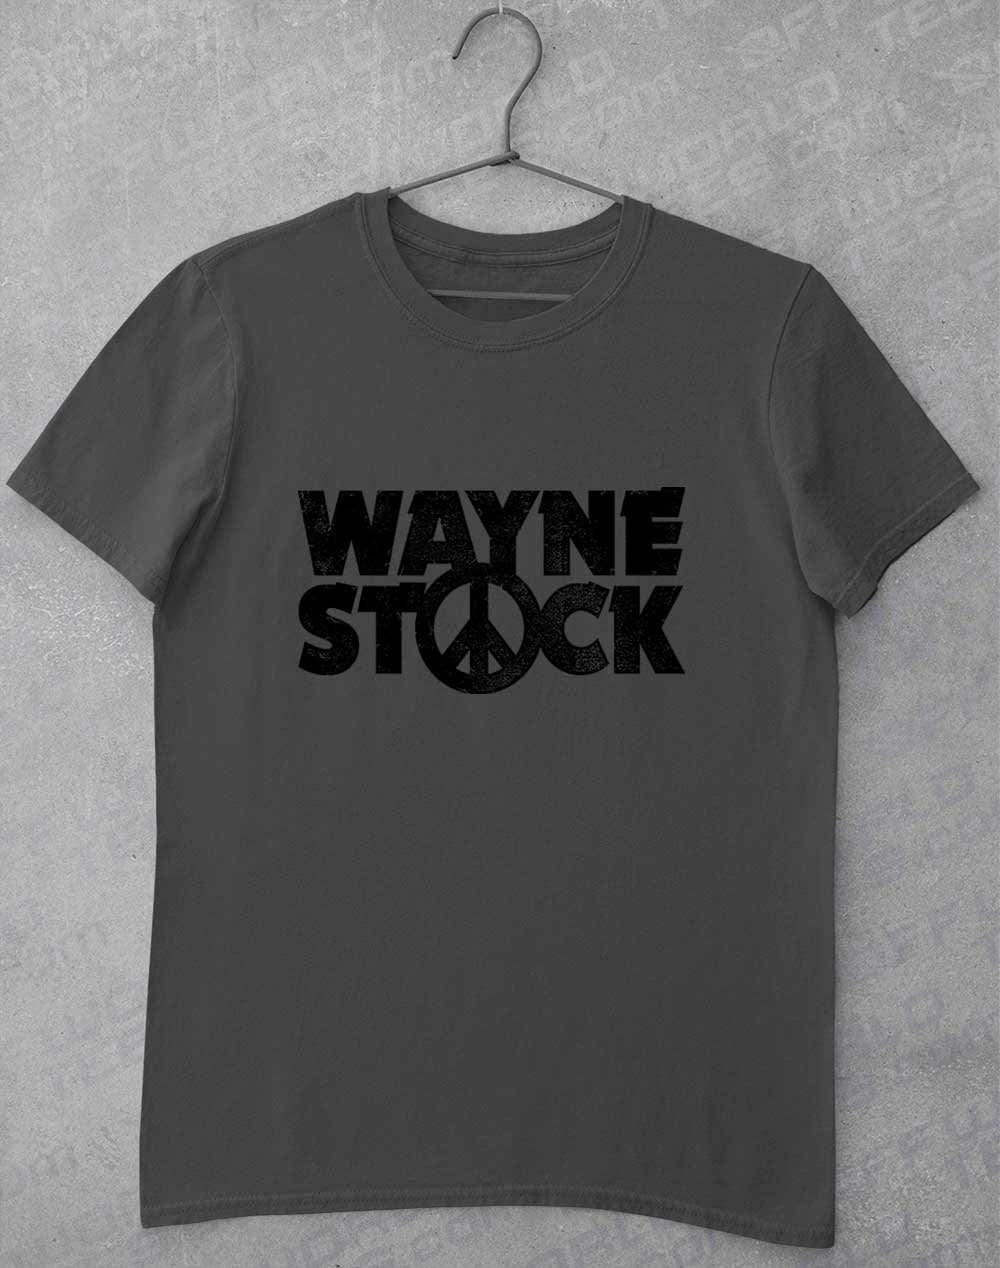 Waynestock T-Shirt S / Charcoal  - Off World Tees